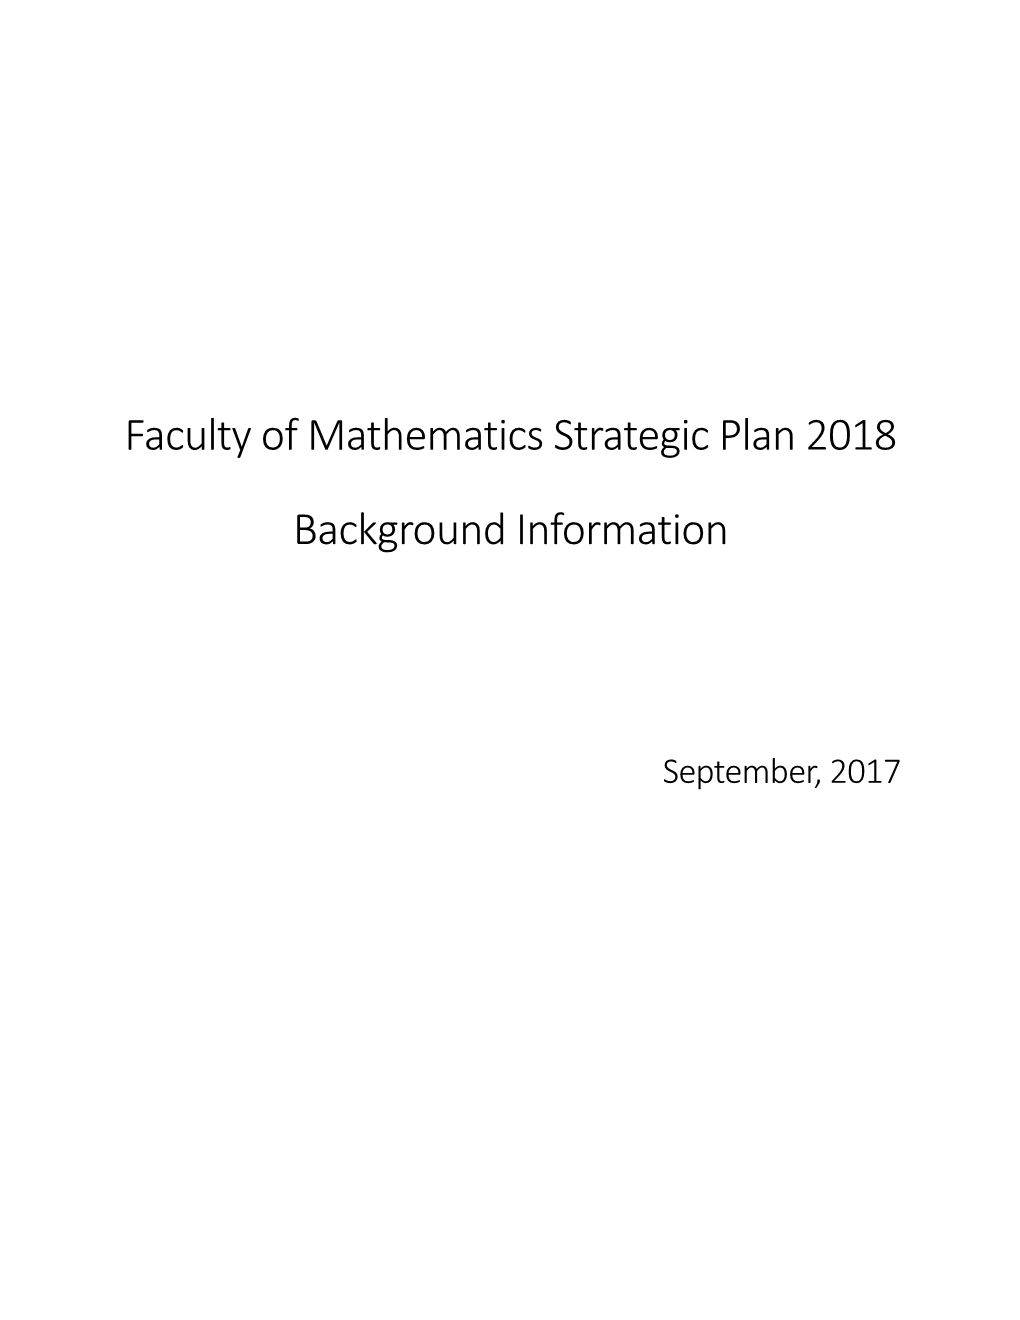 Faculty of Mathematics Strategic Plan 2018 Background Information